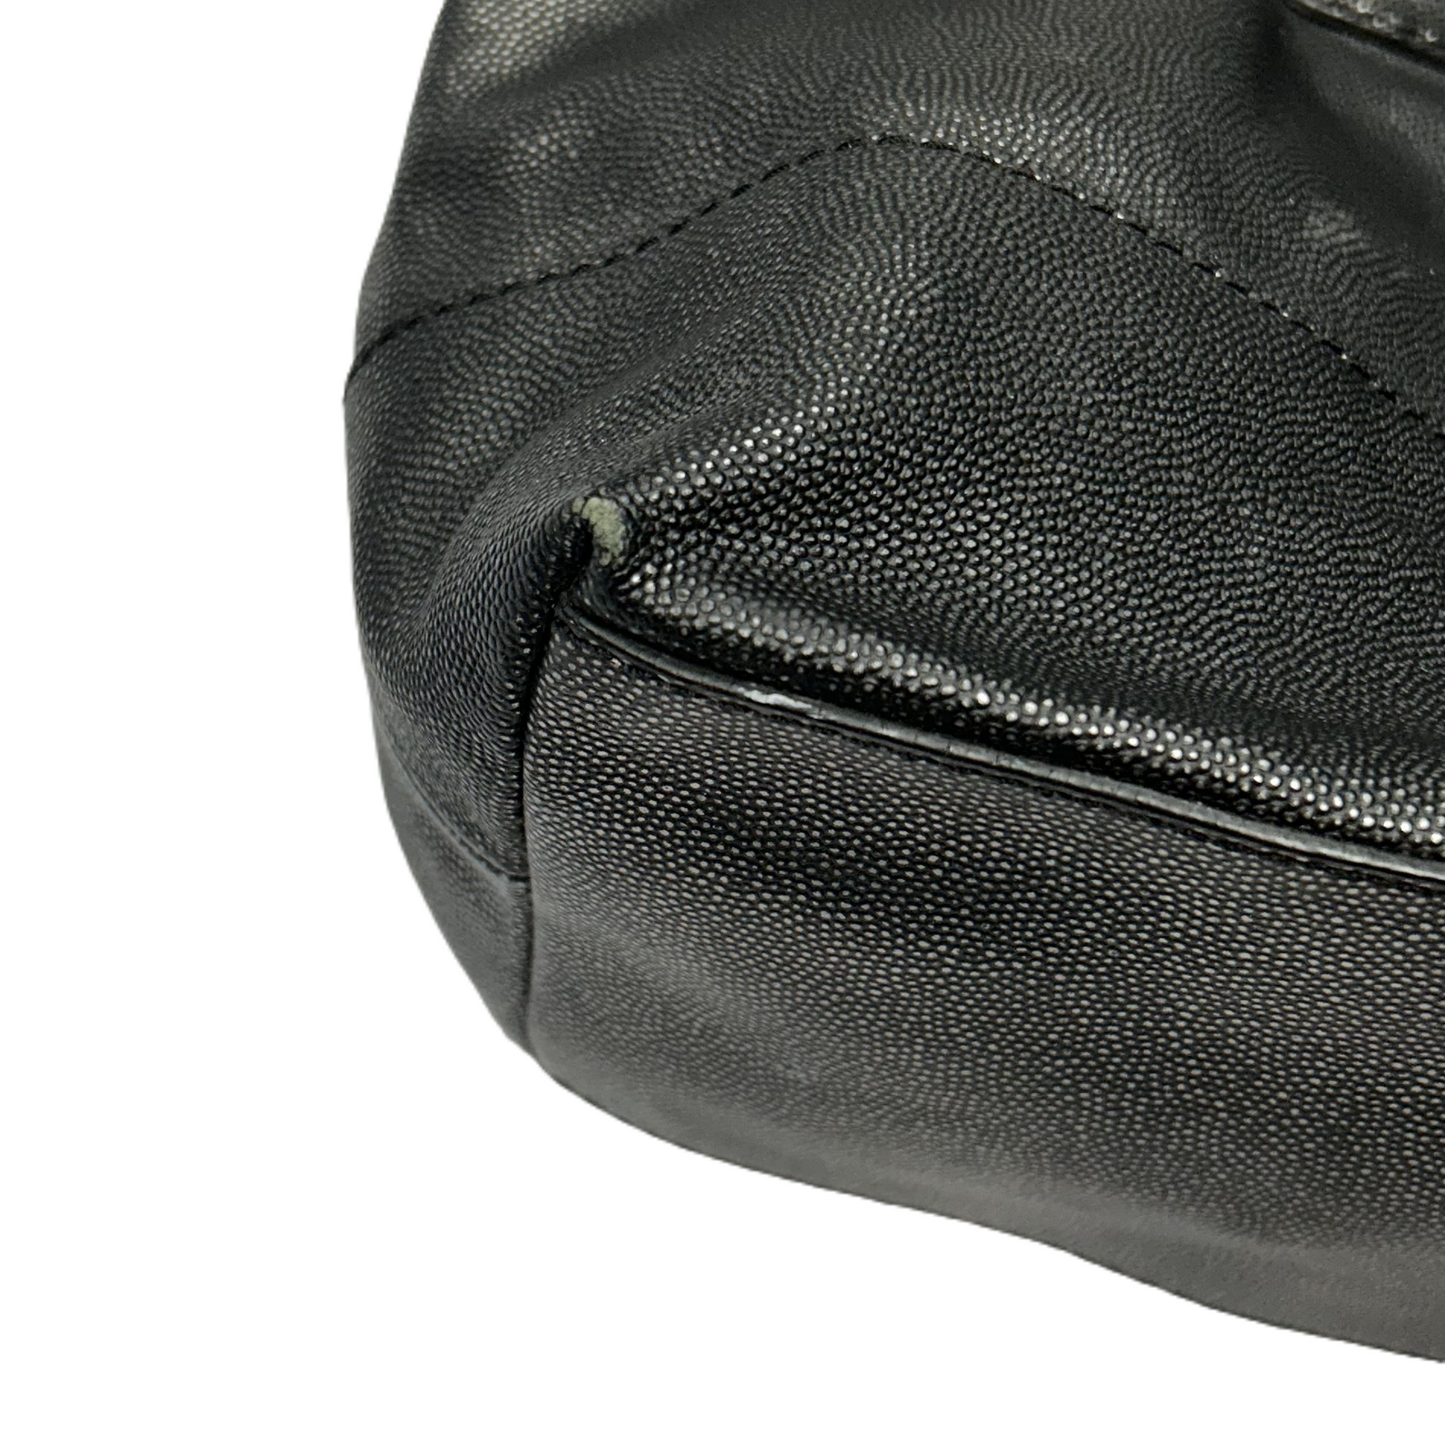 Handbag Designer By Cole-haan  Size: Medium